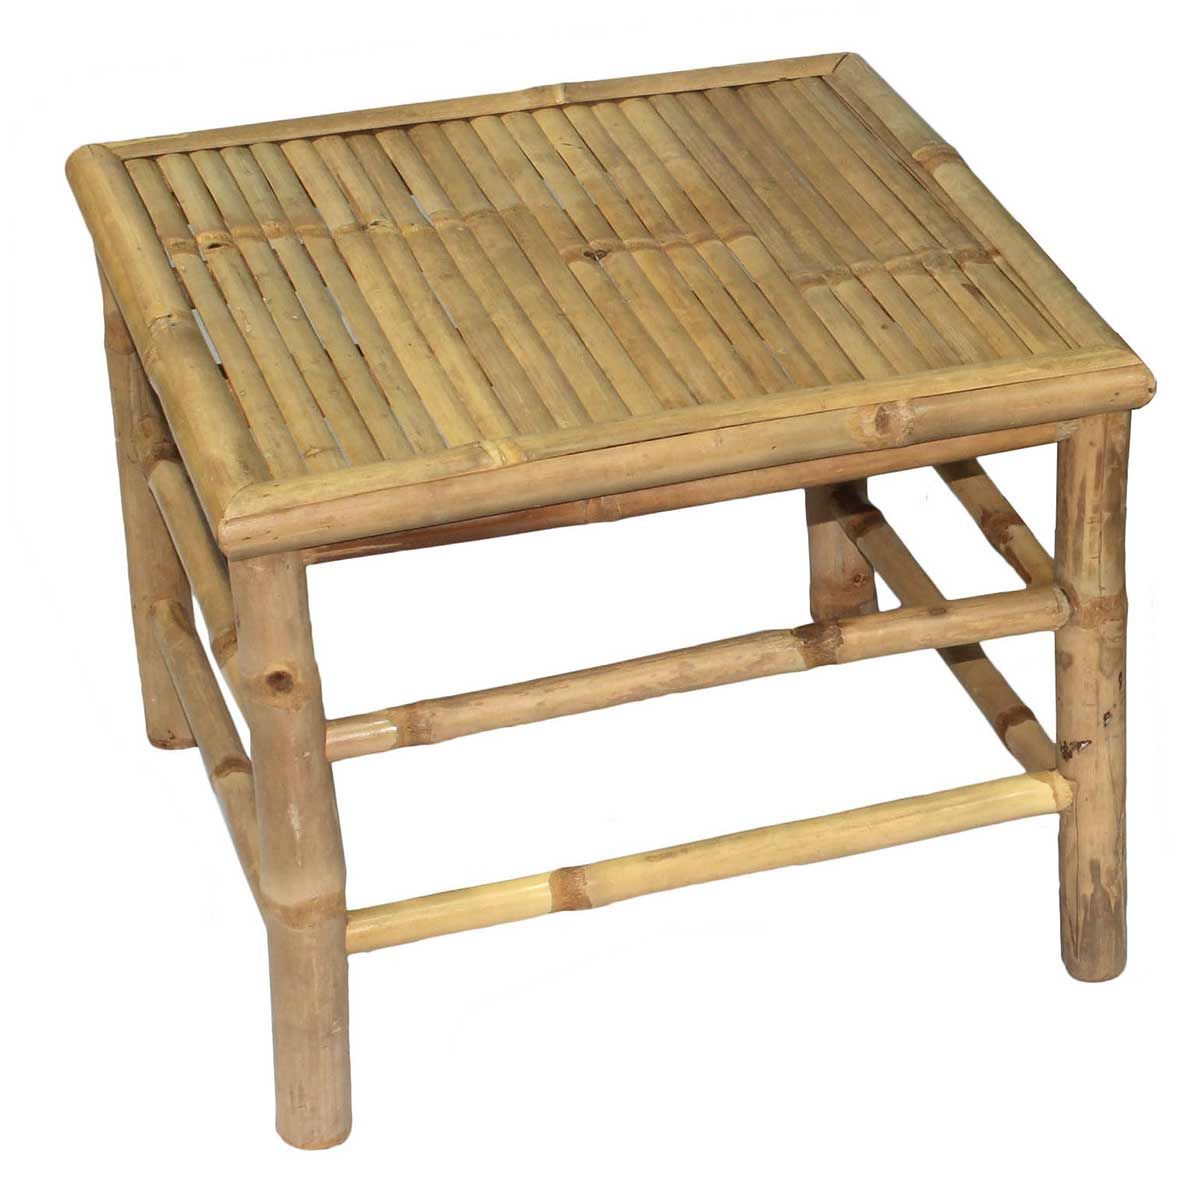 Table basse carrée en bambou naturel ta